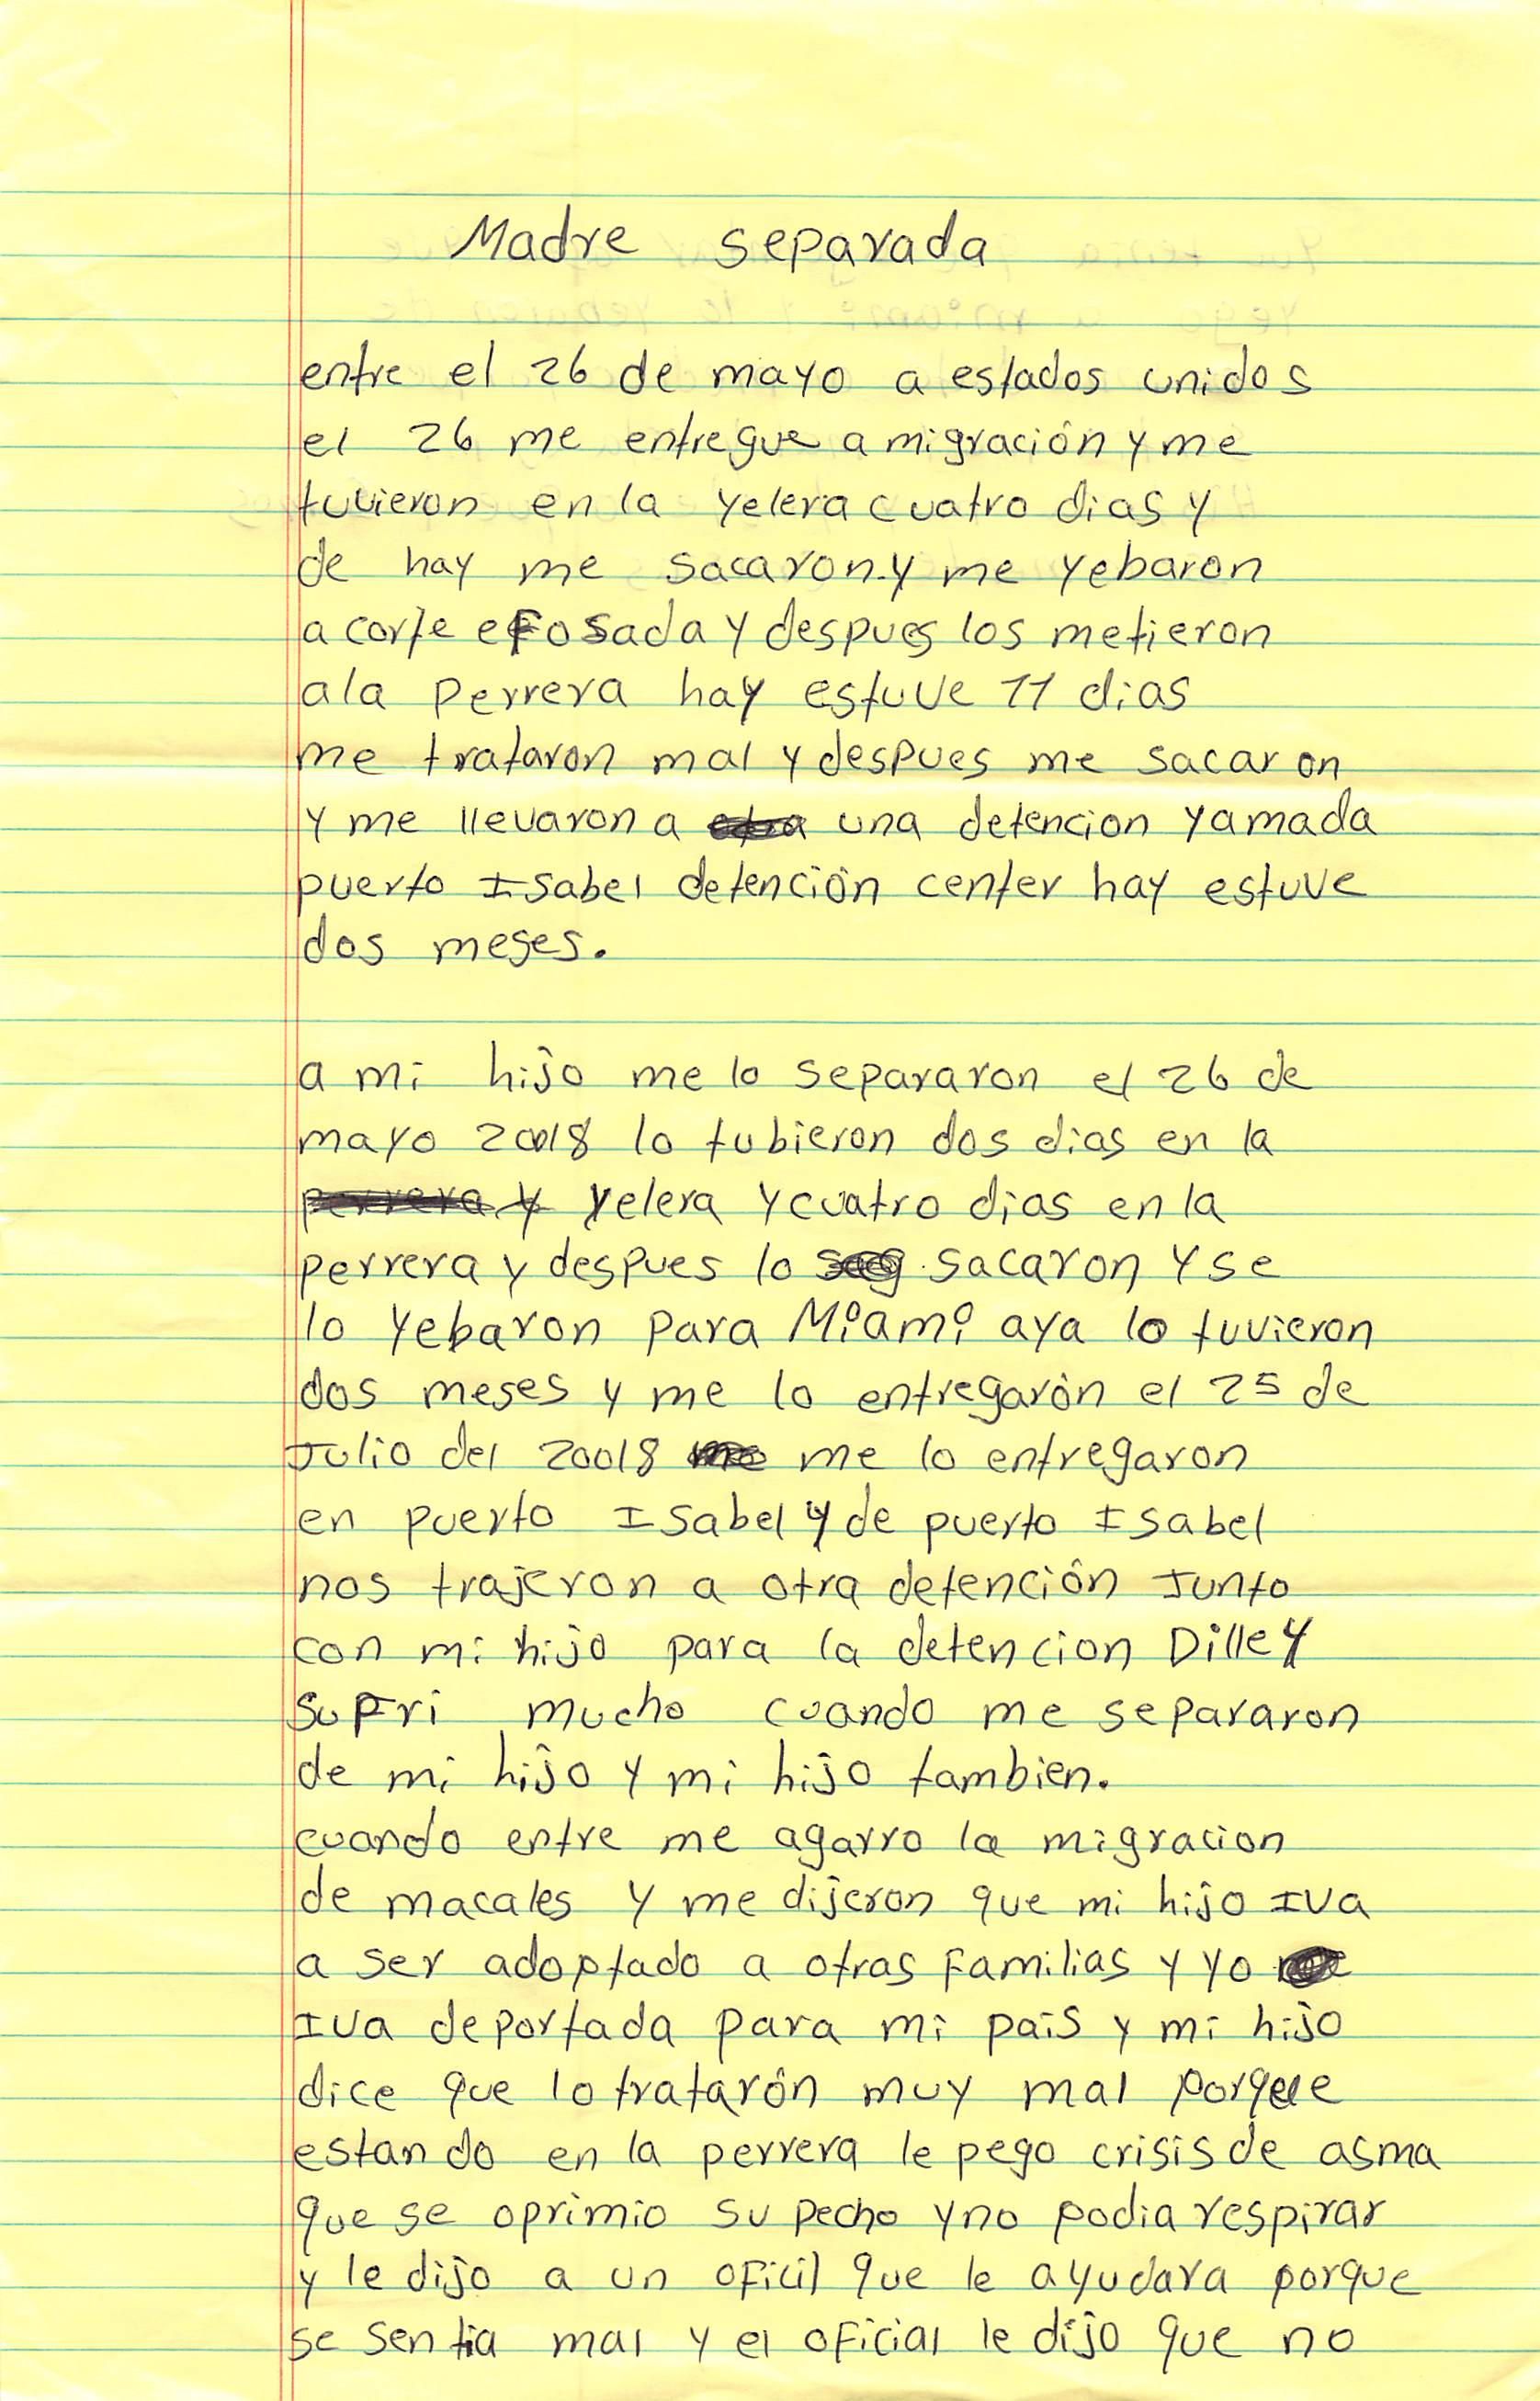 Cristina's Handwritten Letter Part 1